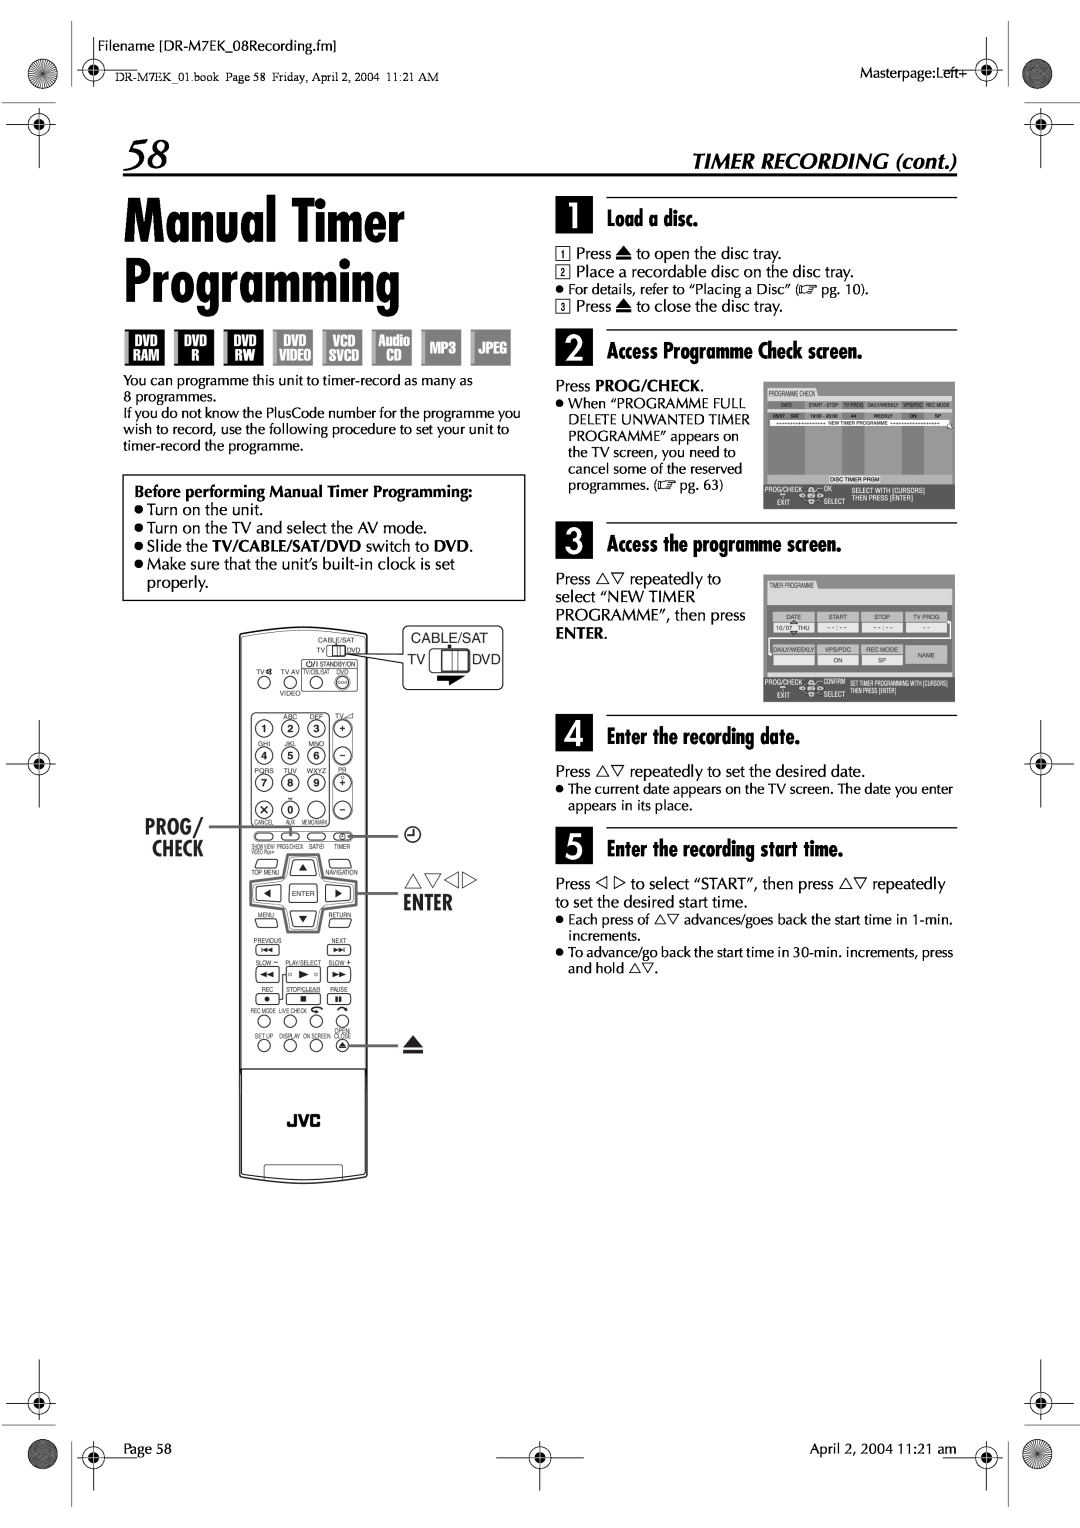 JVC DR-M7S manual Manual Timer Programming, B Access Programme Check screen, C Access the programme screen, rtwe, Enter 